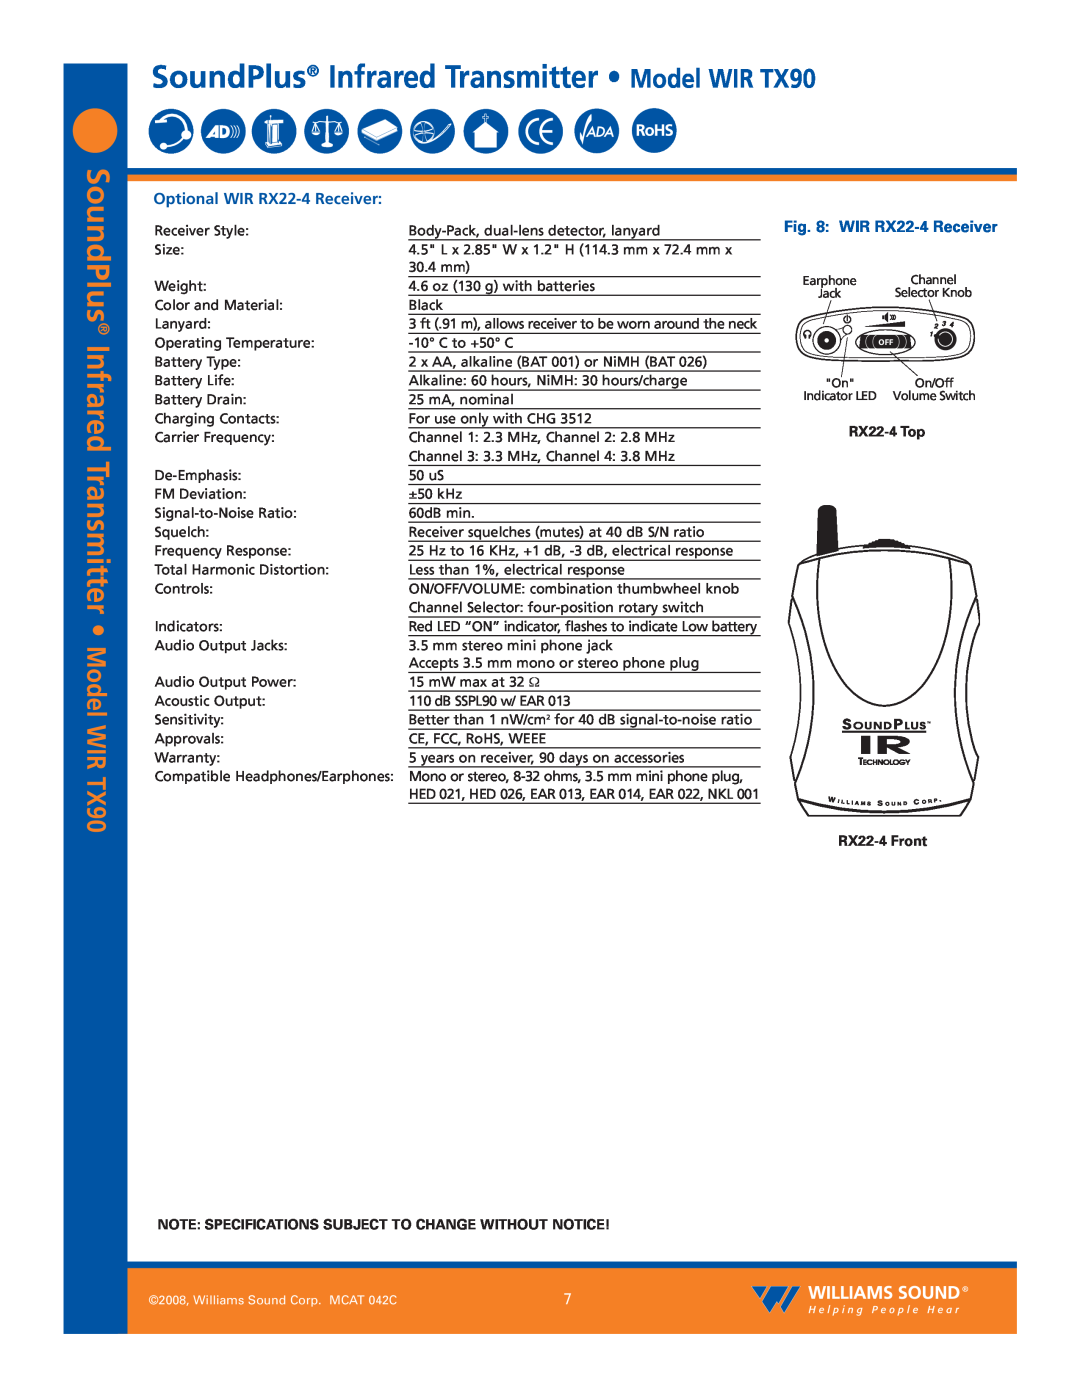 Williams Sound SoundPlus Infrared Transmitter Model WIR TX90, Optional WIR RX22-4Receiver, RX22-4Top, RX22-4Front 